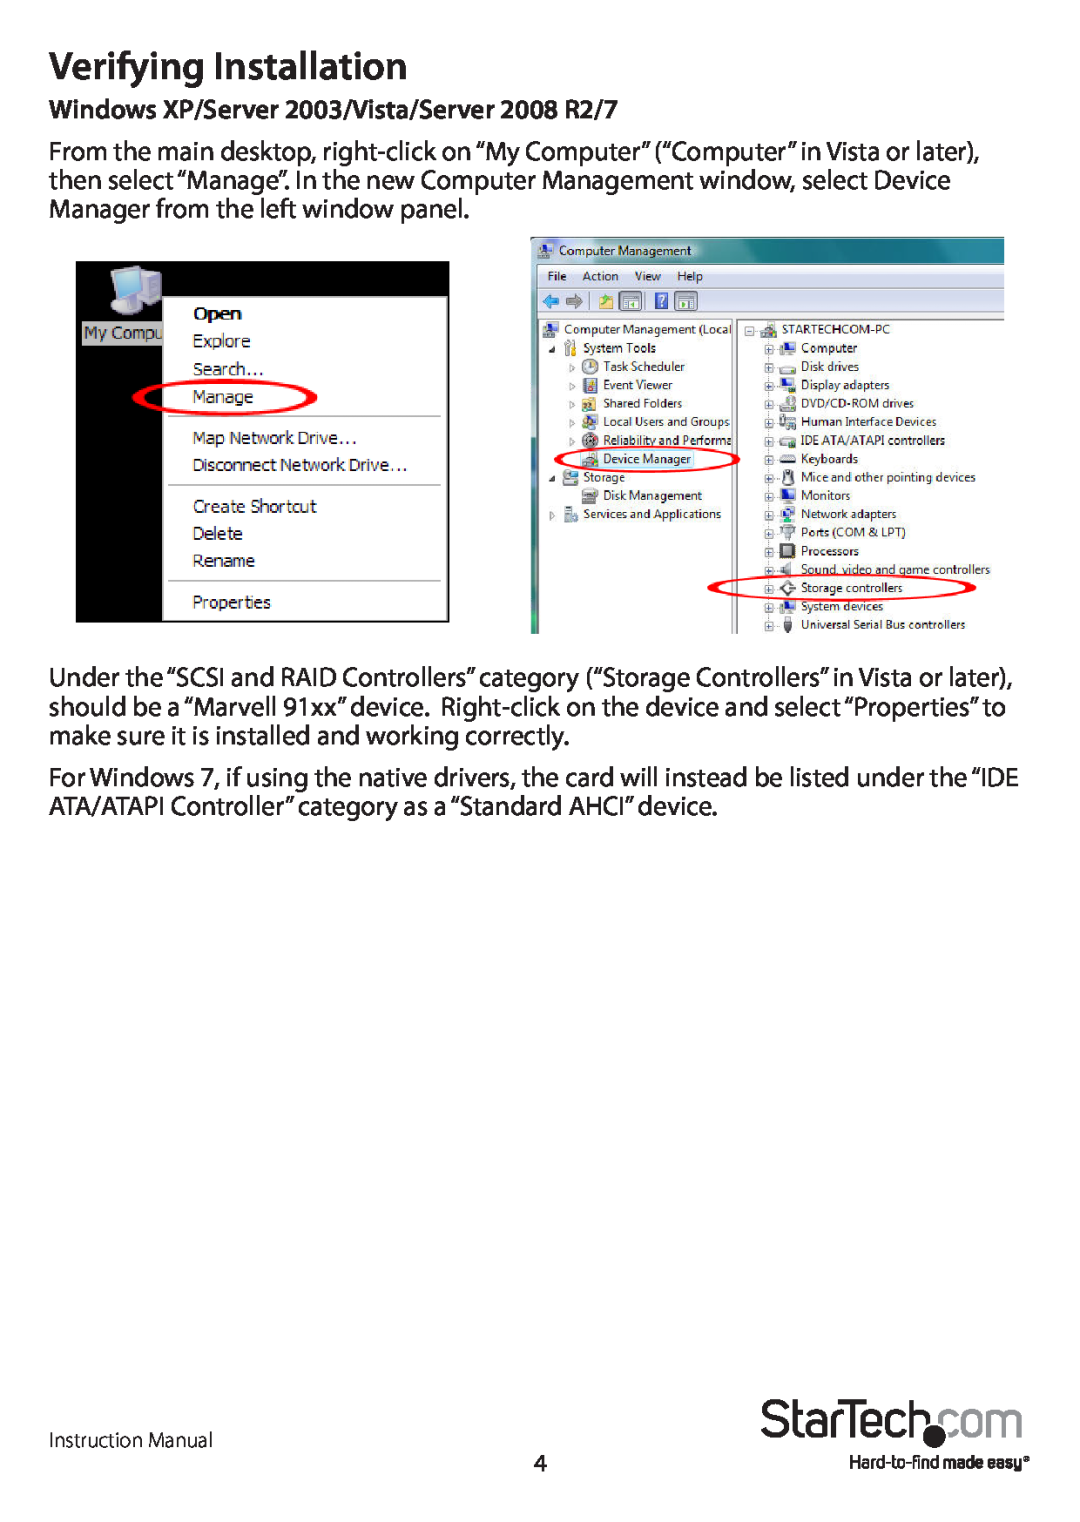 StarTech.com PEXSAT34 manual Verifying Installation, Windows XP/Server 2003/Vista/Server 2008 R2/7 